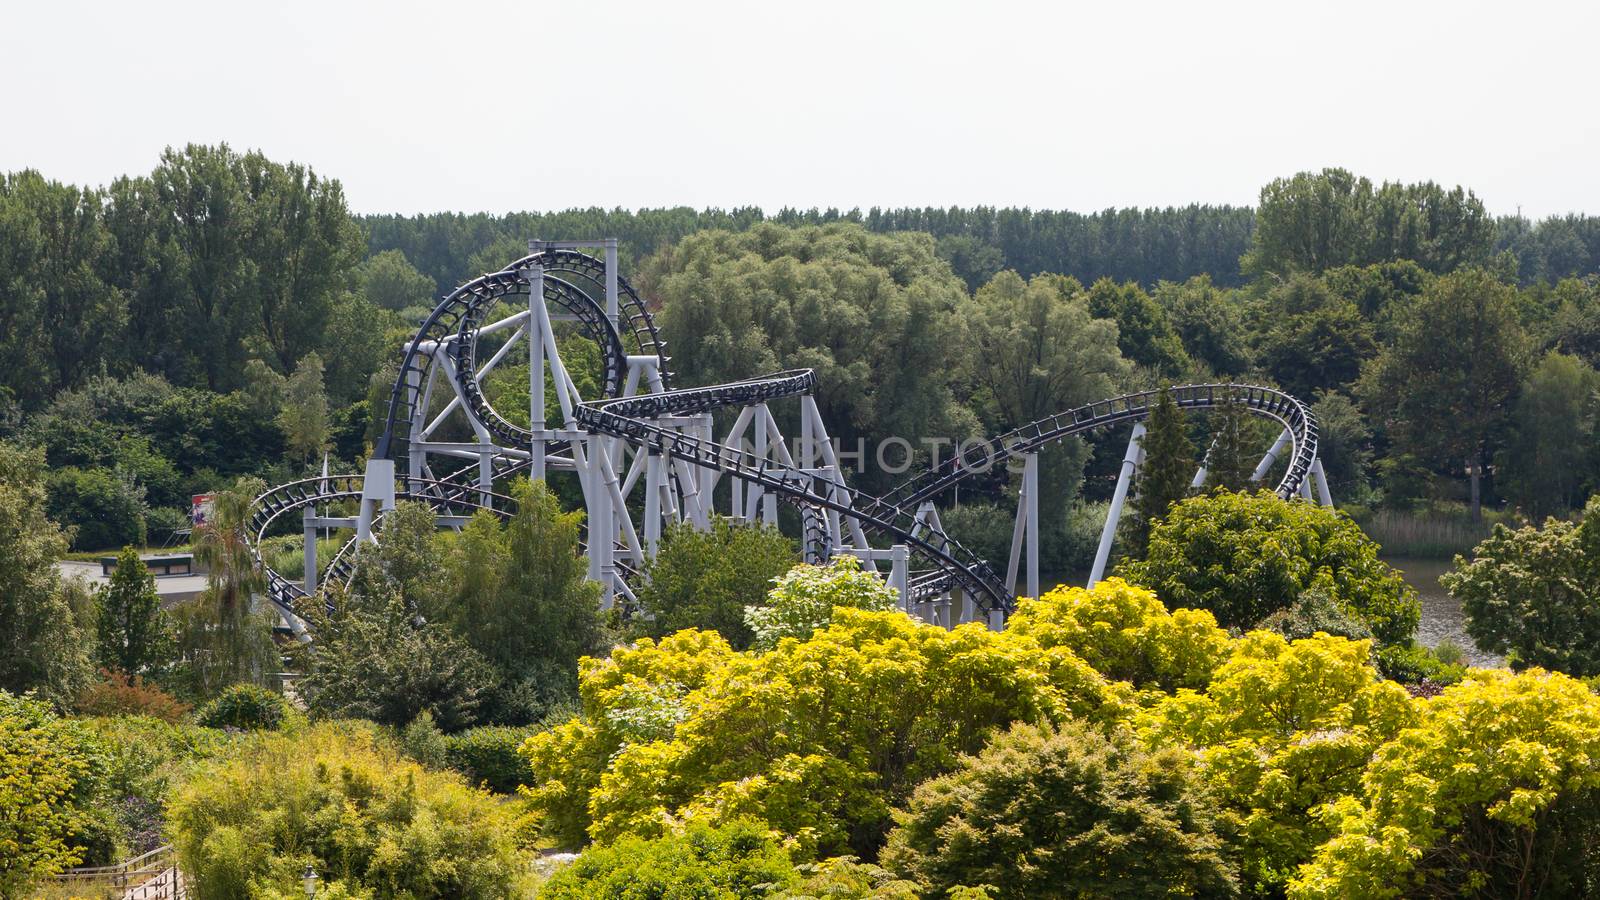 Rollercoaster ride by michaklootwijk